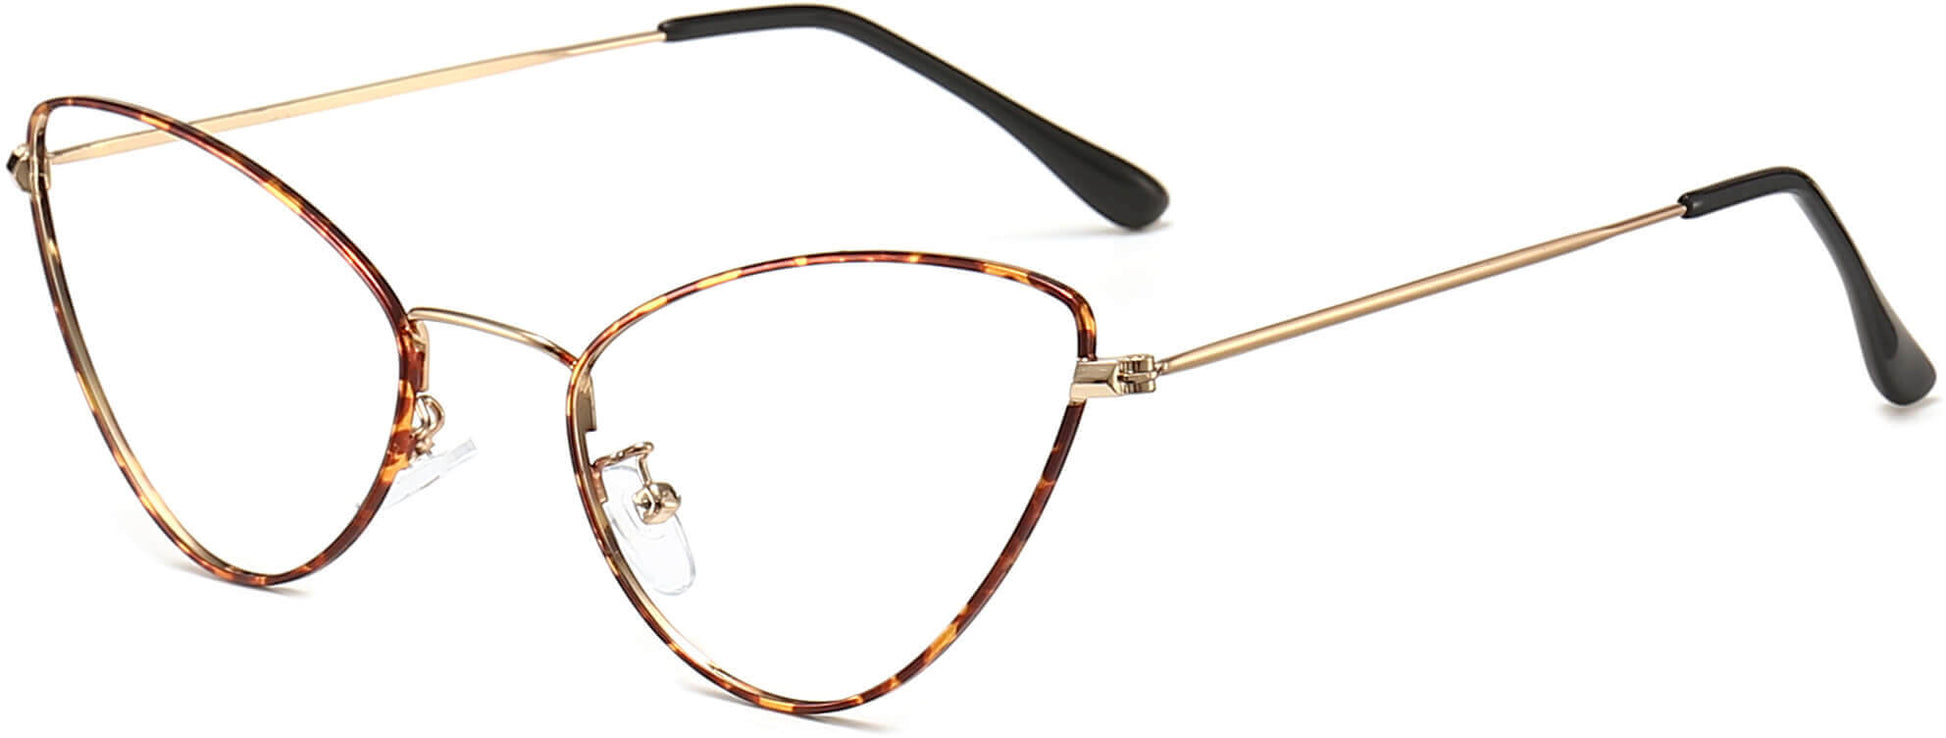 Gemma Cateye Tortoise Eyeglasses from ANRRI, angle view